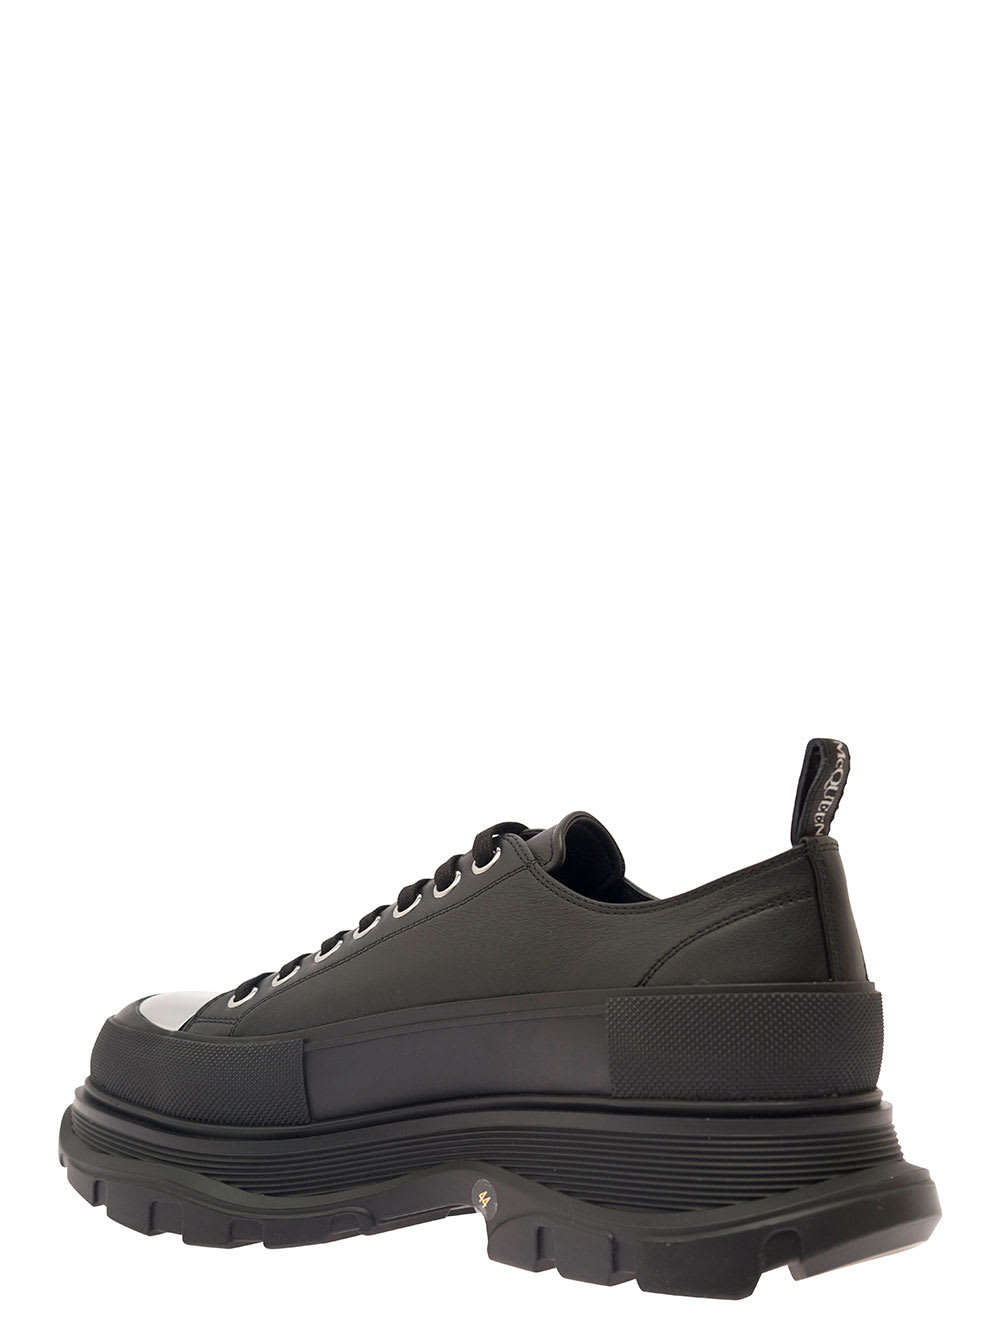 Shop Alexander Mcqueen Trade Slick Black Sneakers With Oversized Platform And Metallic Toe In Leather Man